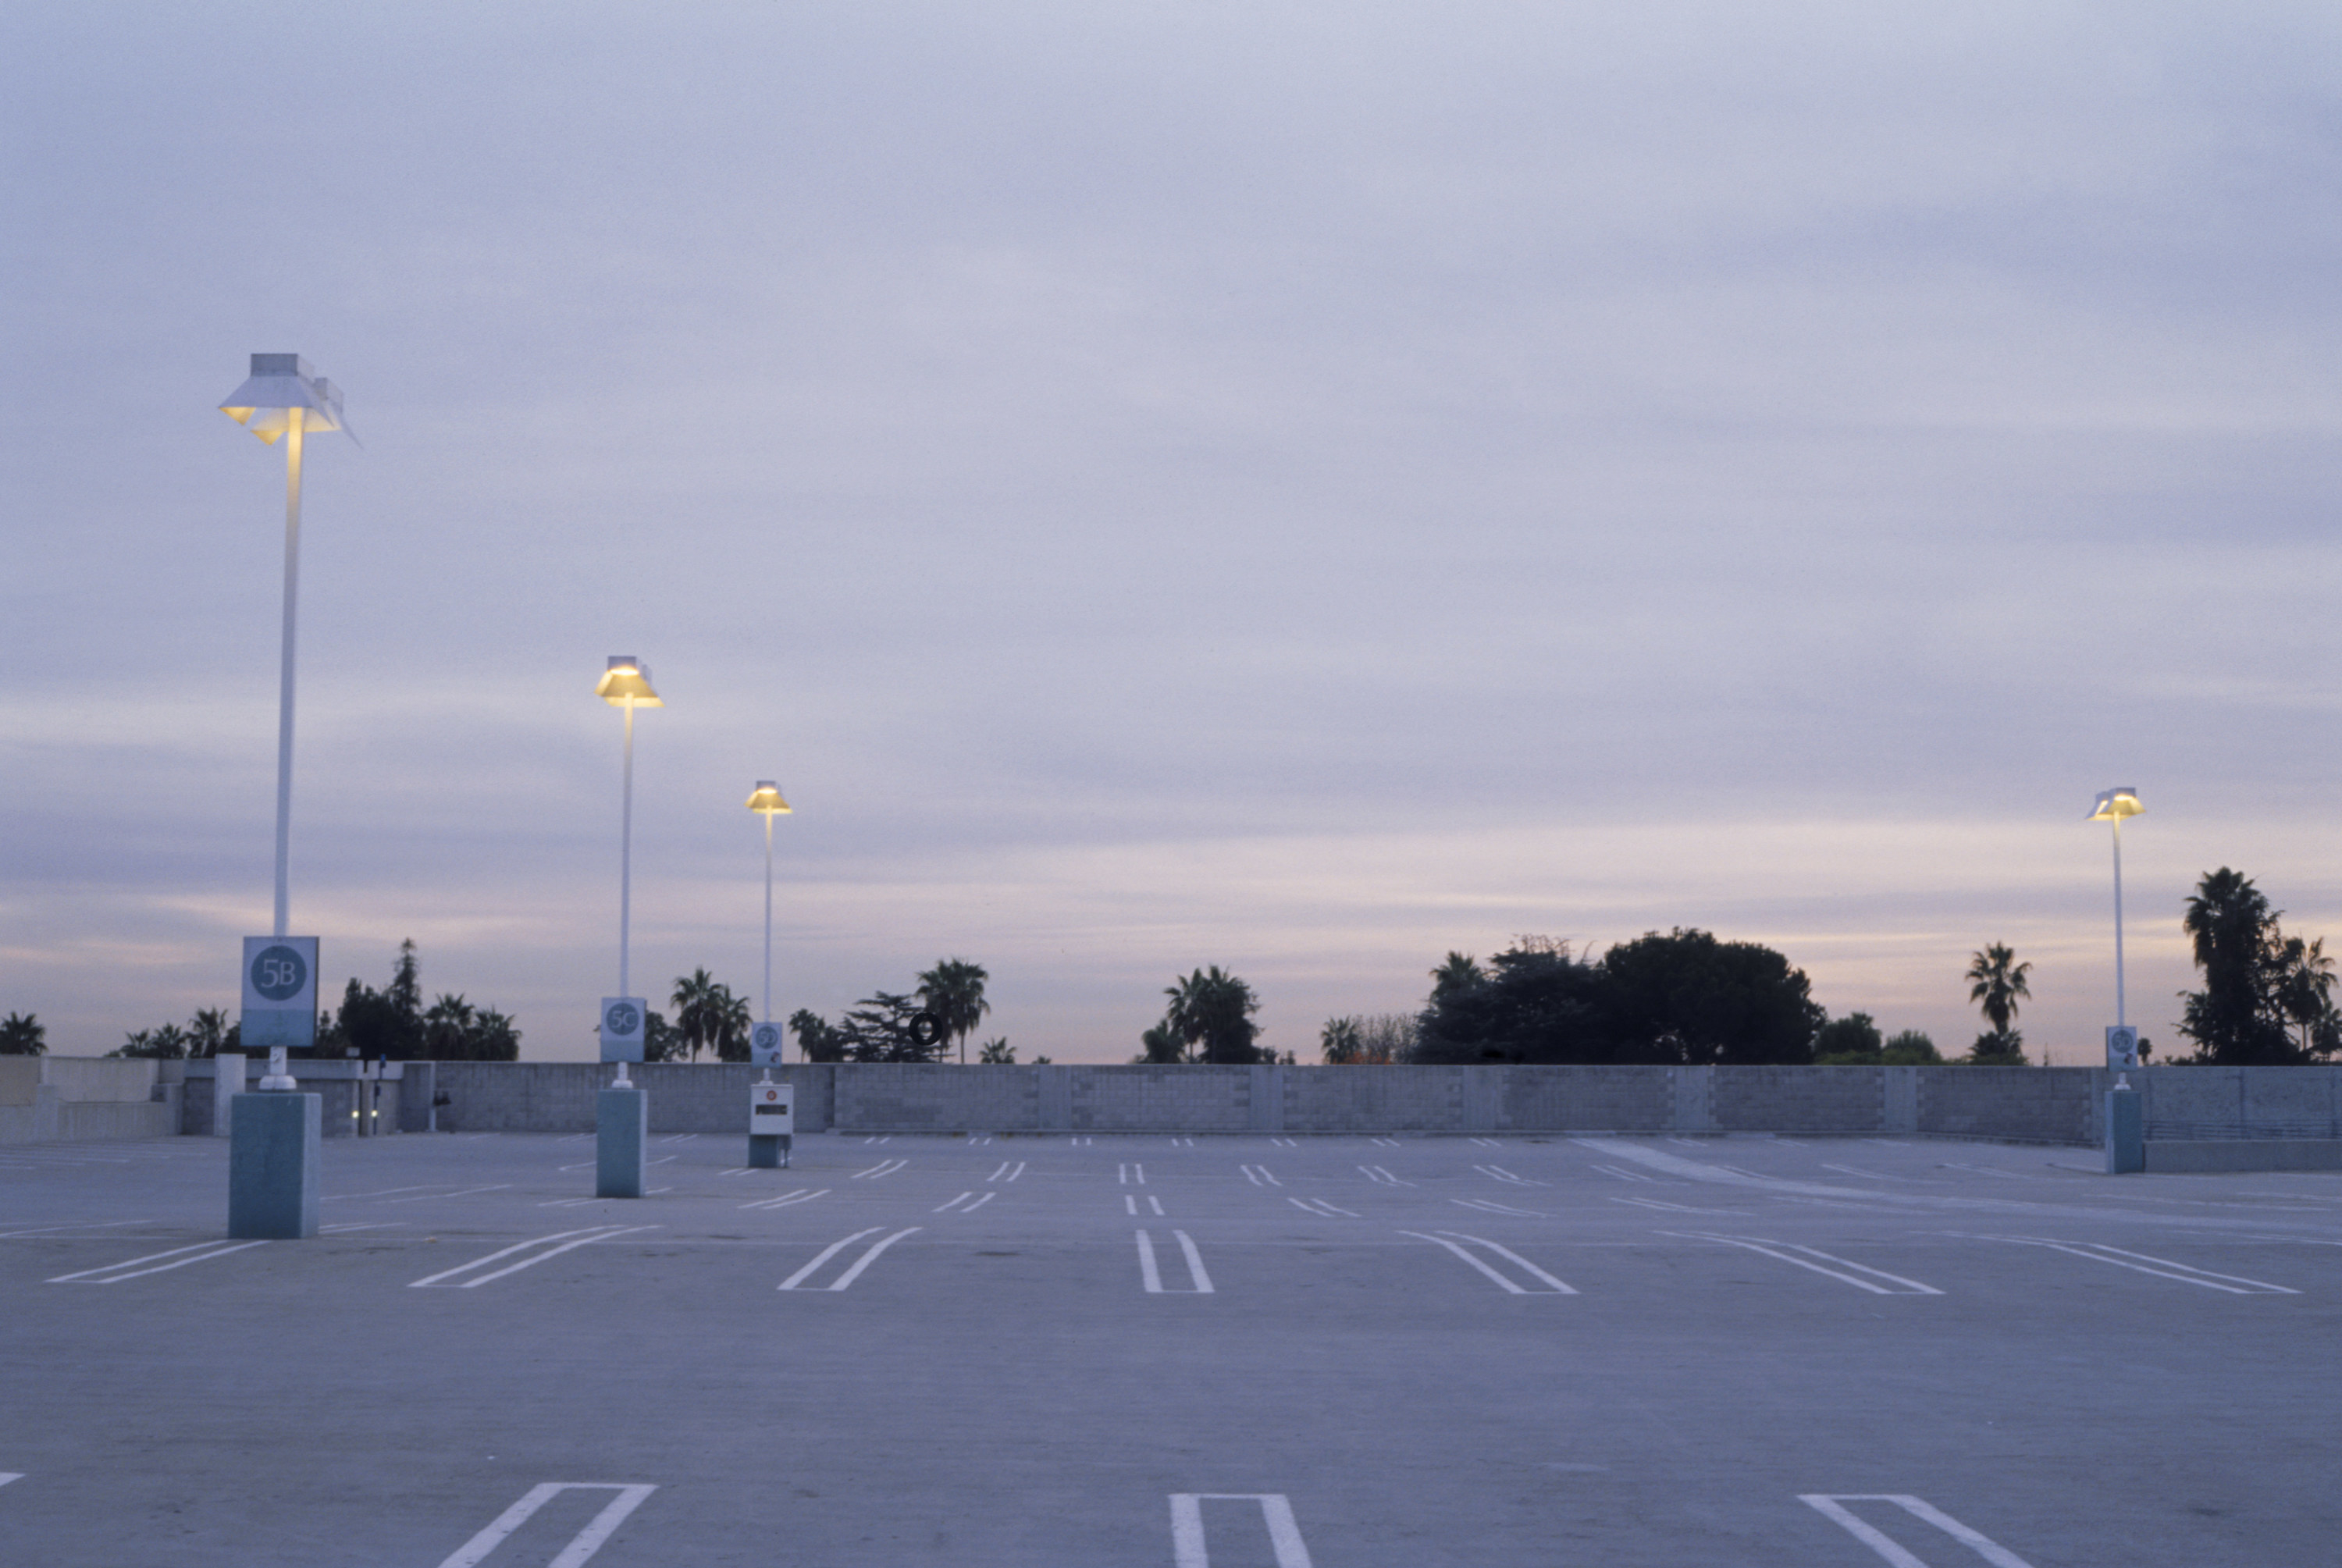 an empty parking lot at dusk